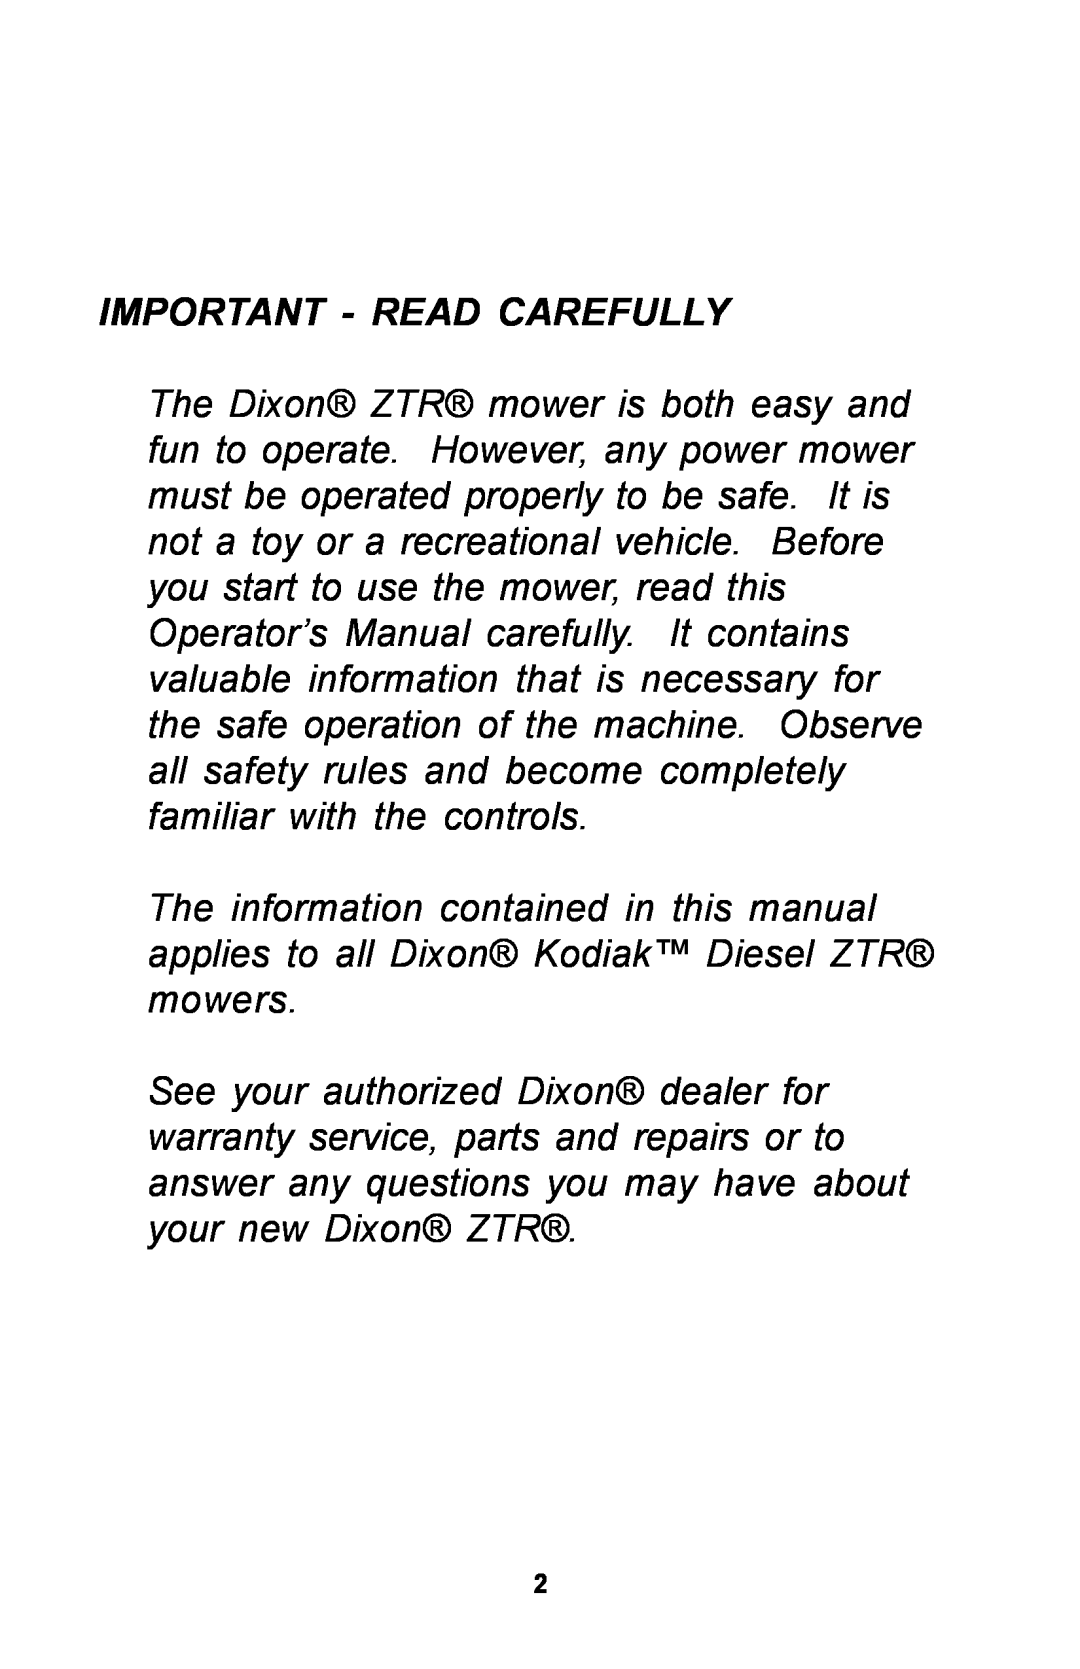 Dixon ZTR manual Important - Read Carefully 